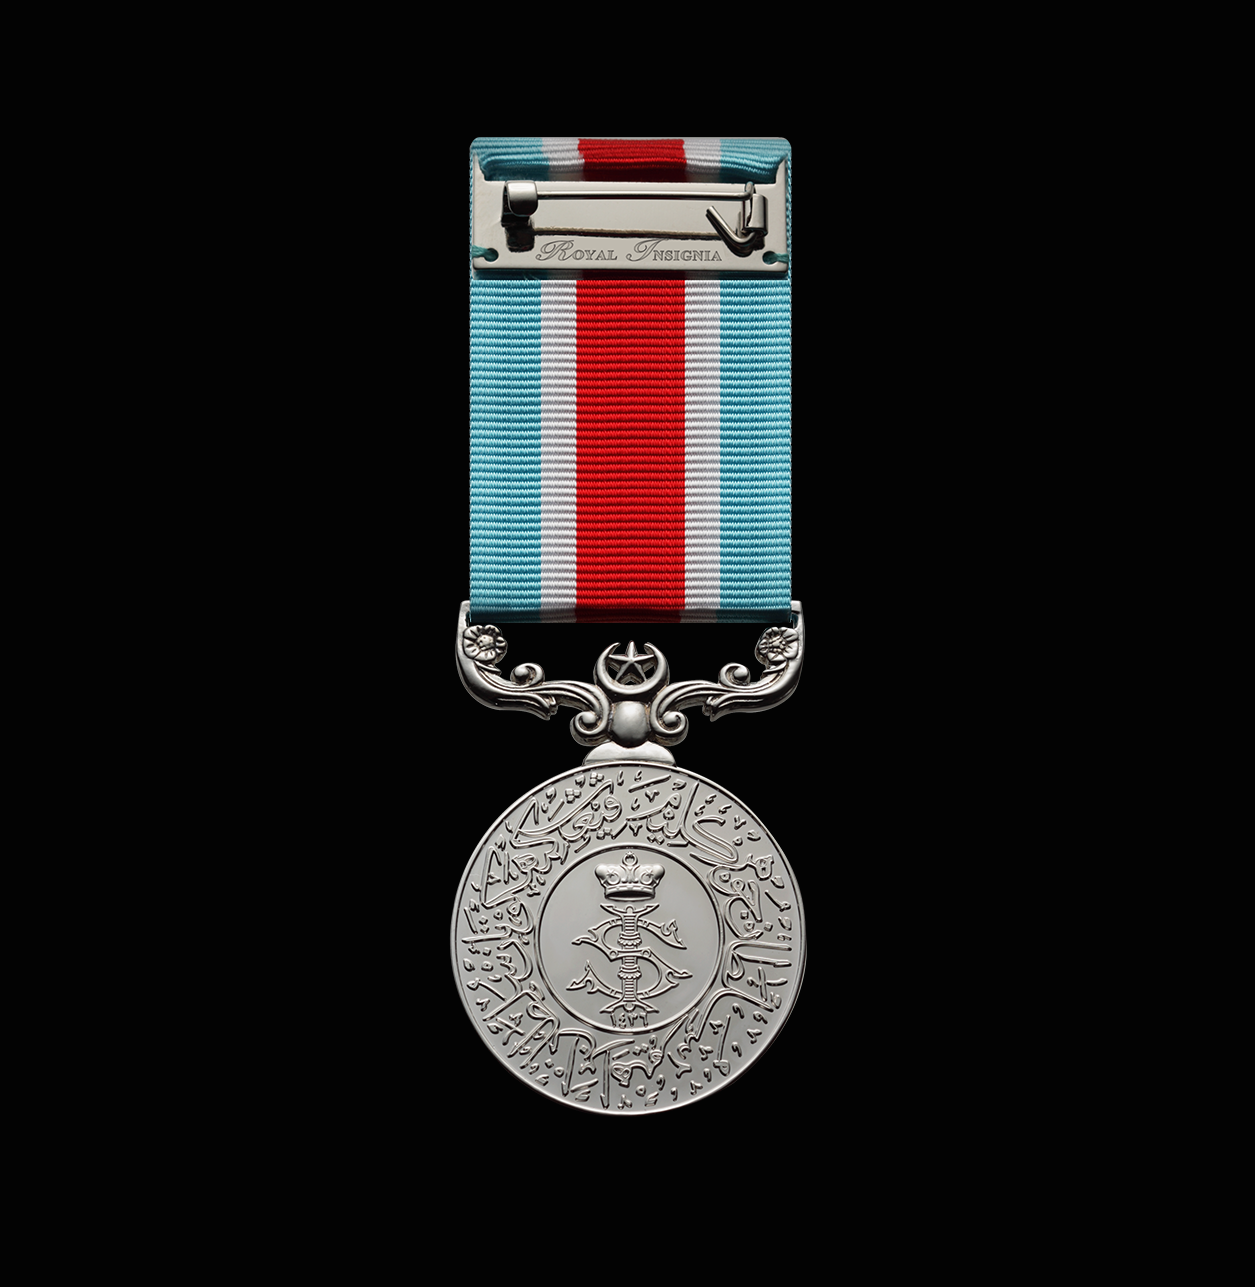 The Coronation of Sultan Ibrahim Johor Medal